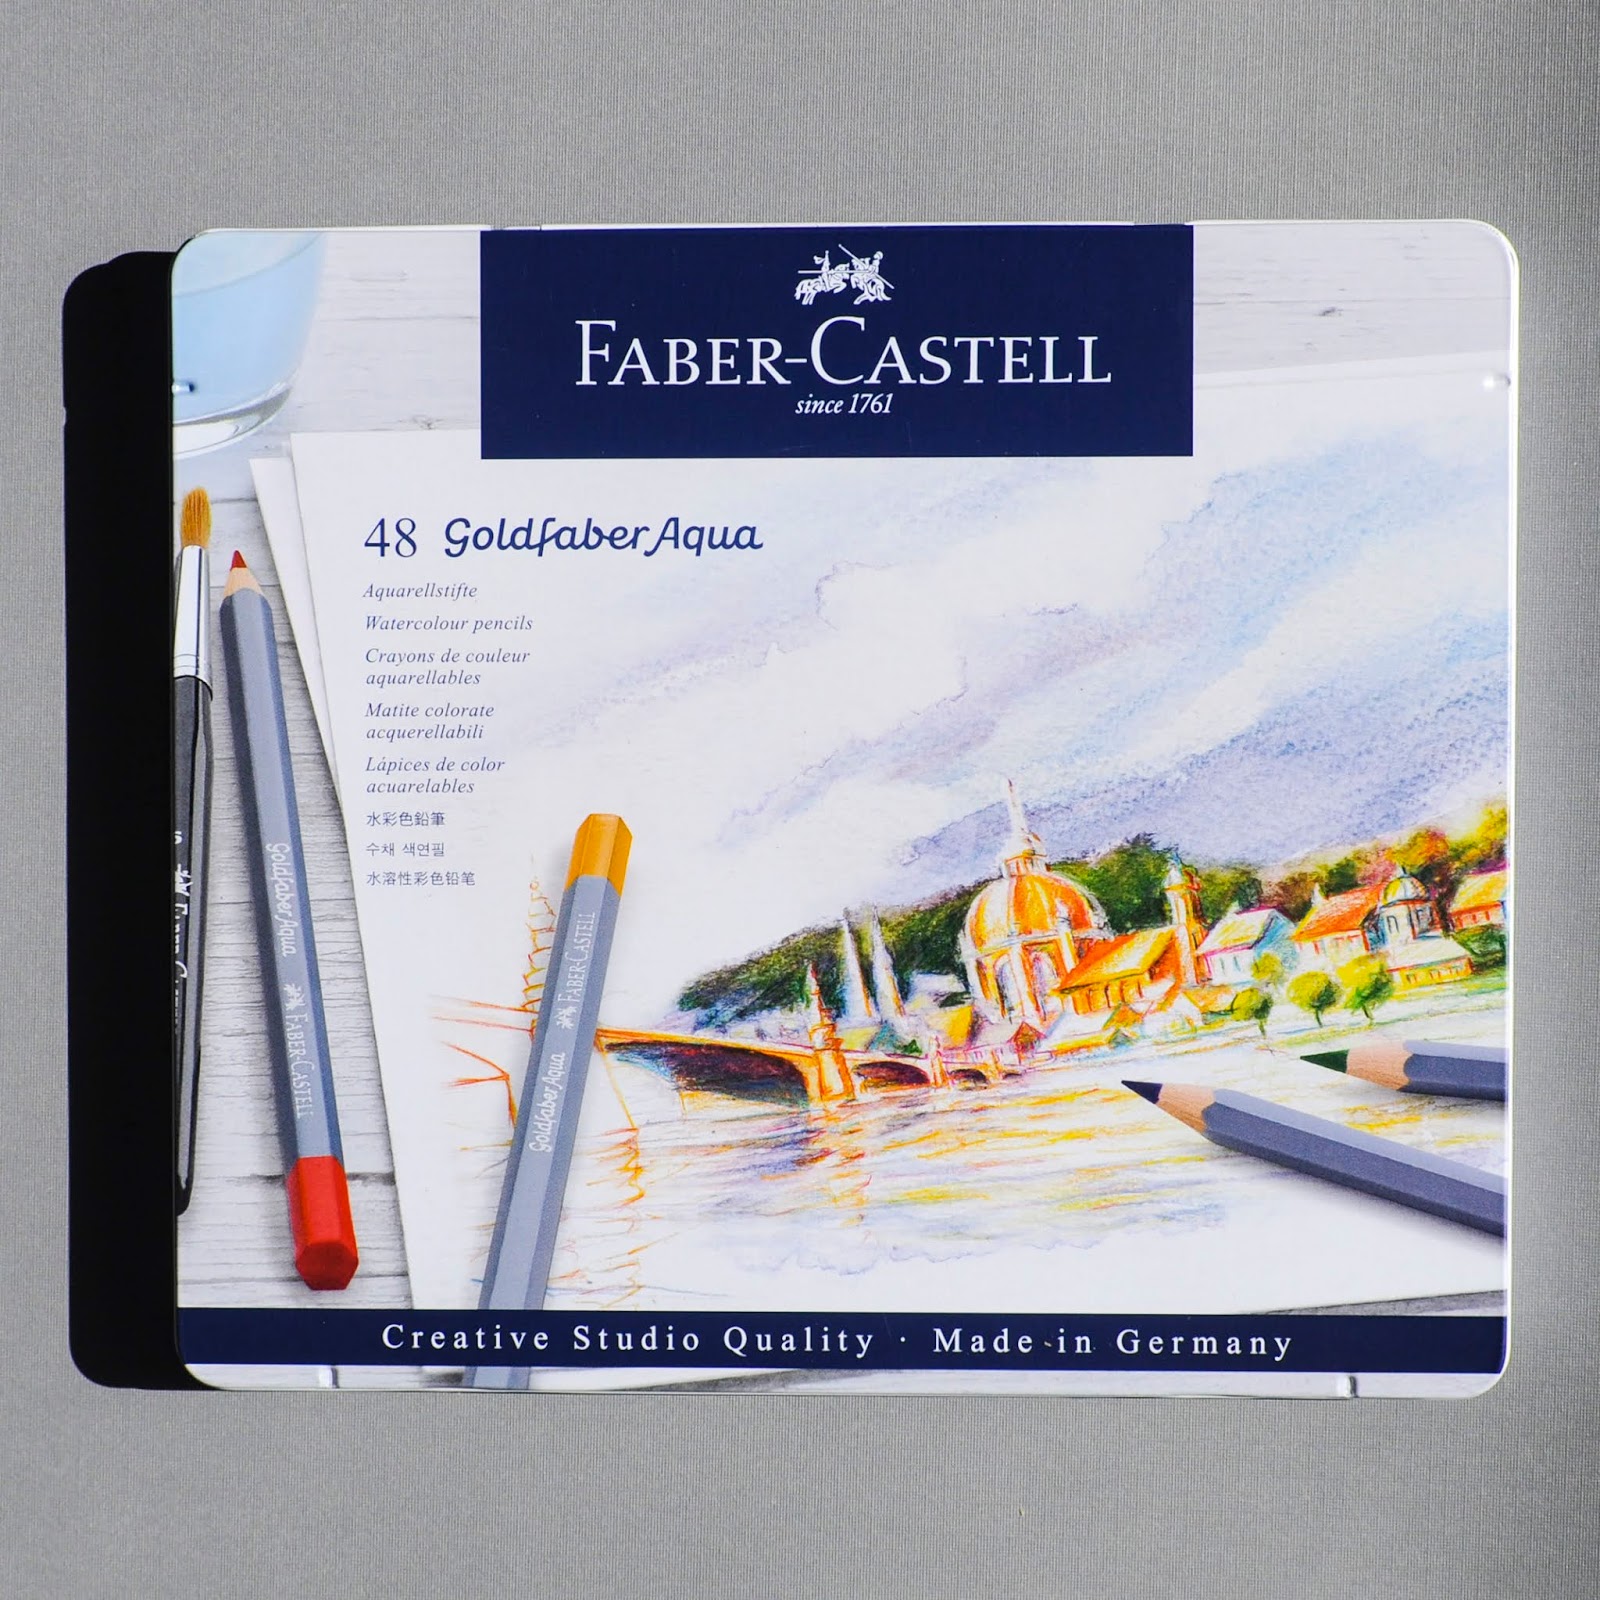 Faber-Castell 48 Goldfaber Regular and Aqua Colored Pencils Review